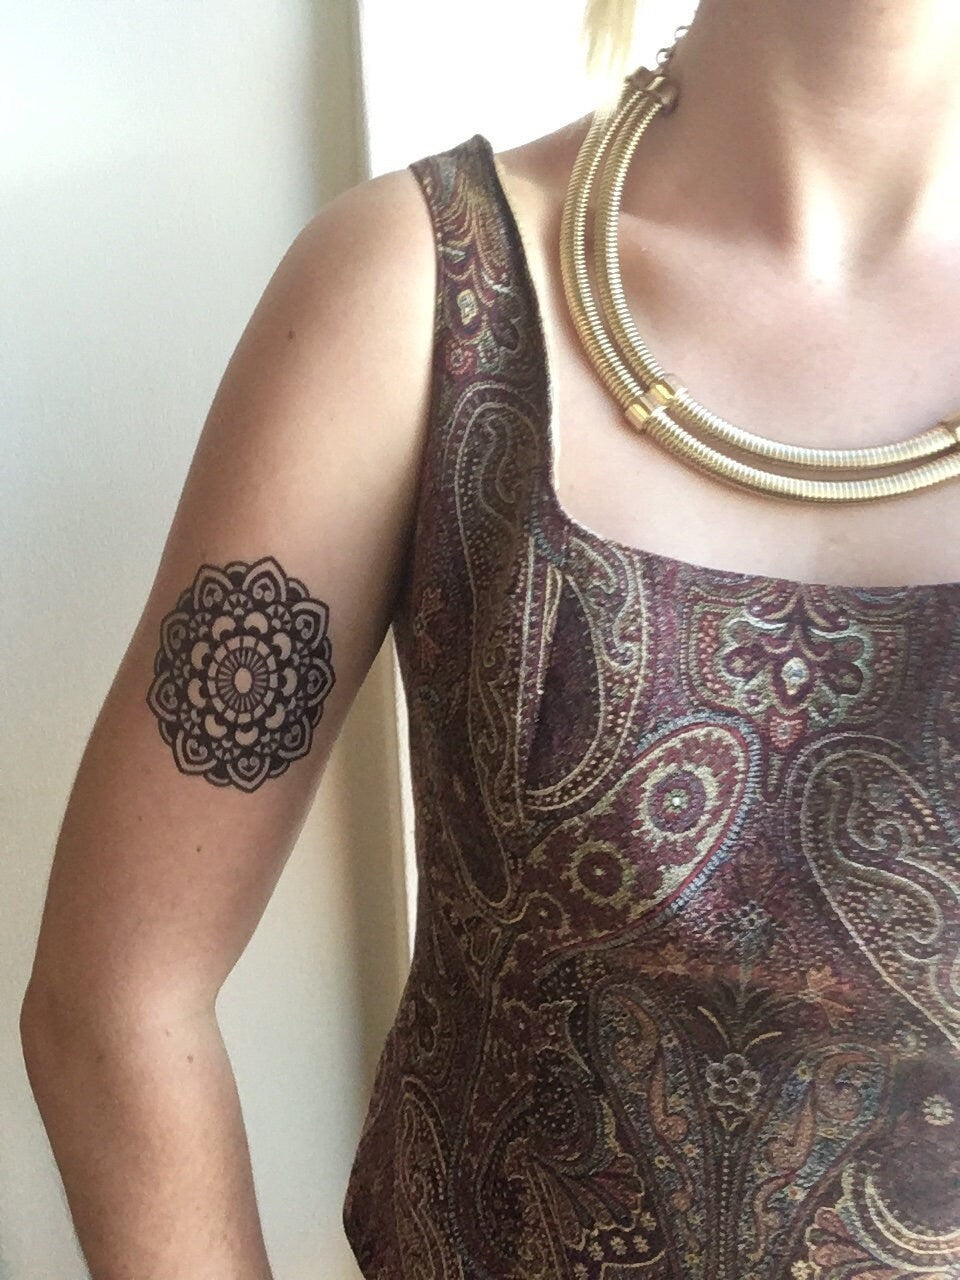 Circular Flow Mandala Tattoo | Black spiritual prahna flower design, set of 3 temporary tattoos